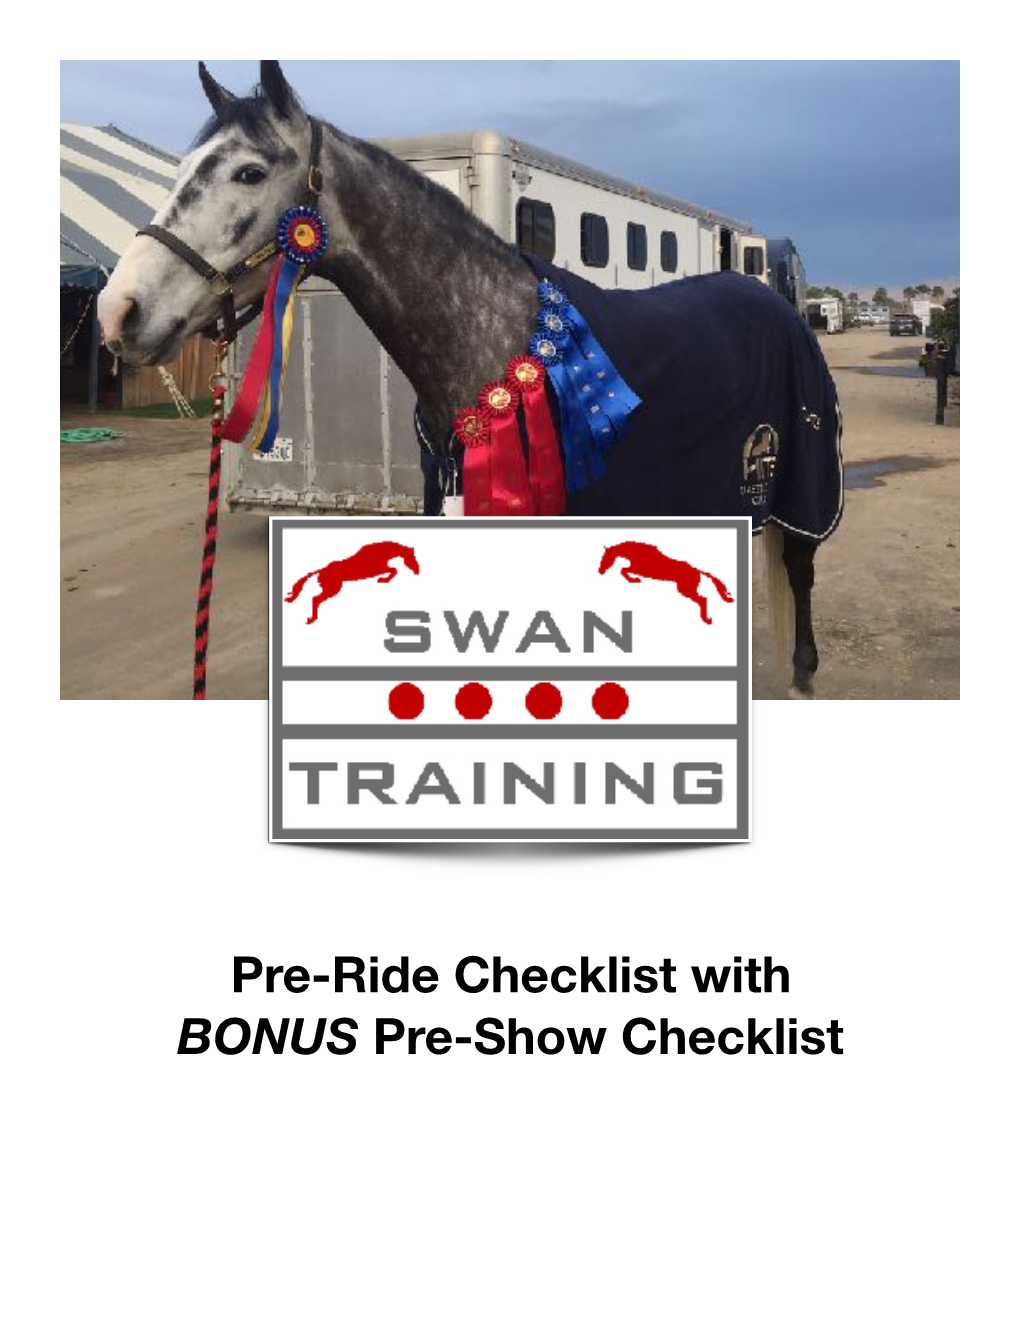 Pre-Ride Checklist with BONUS Pre-Show Checklist